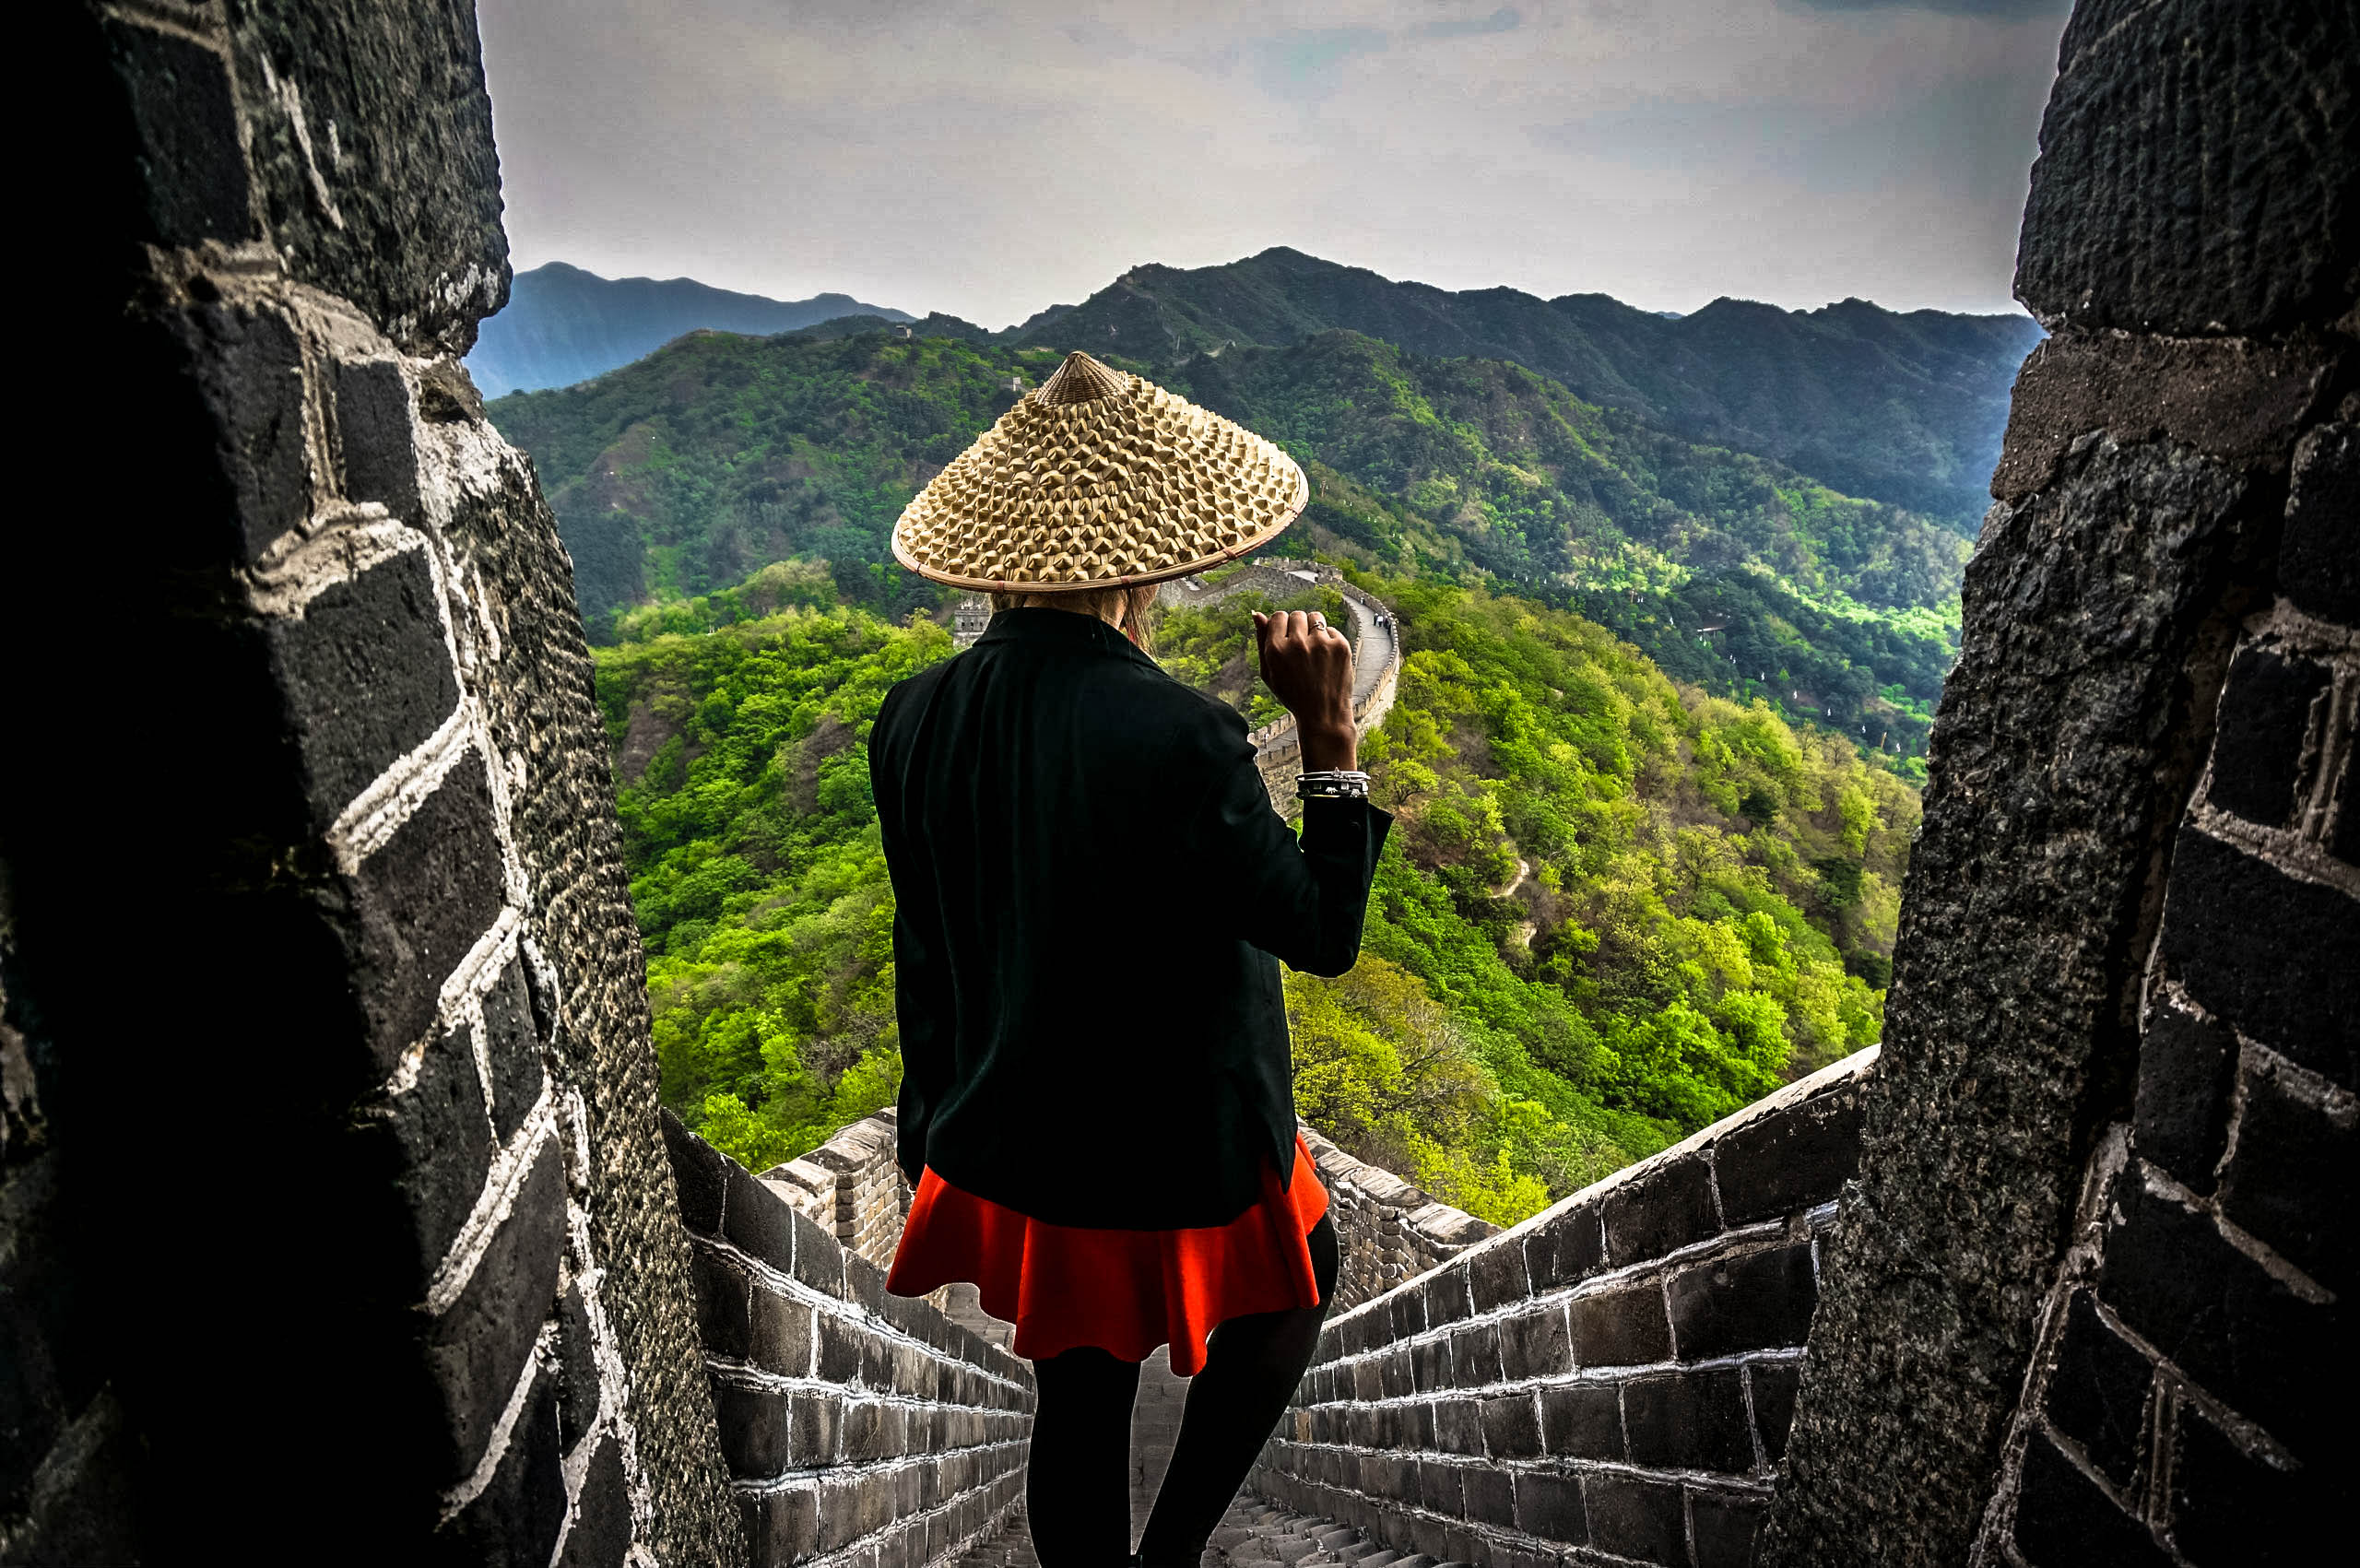 Onwards: Great Wall